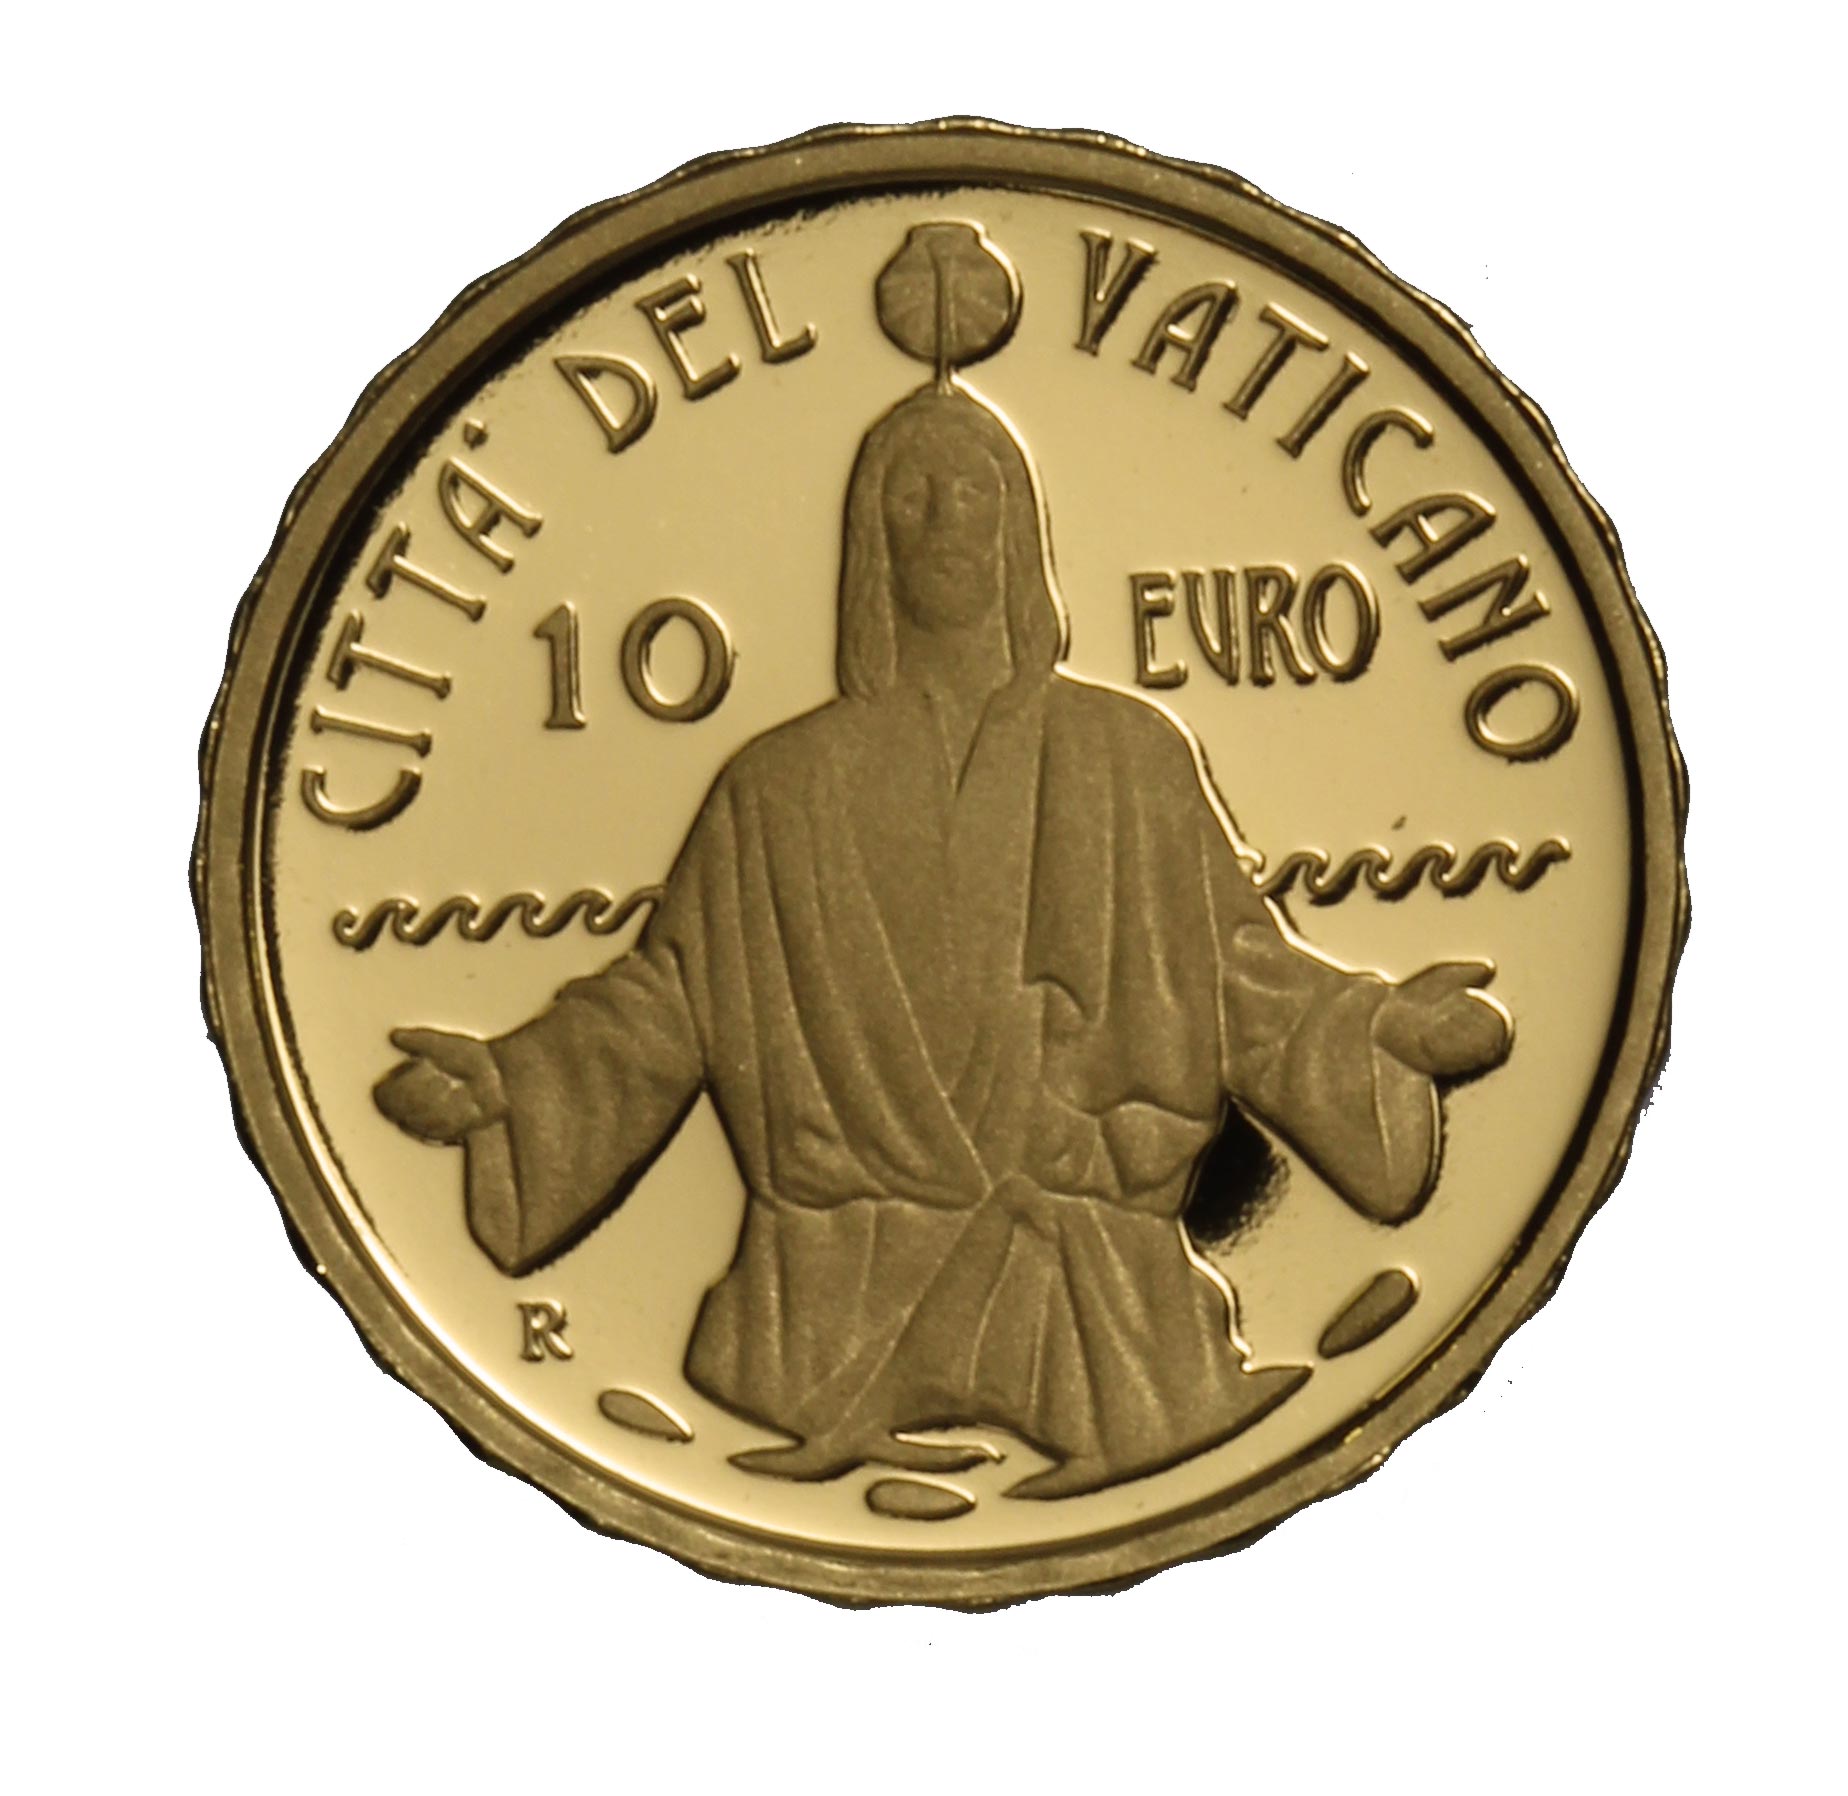 17115_263_1 2019-10-euro-Battesimo-oro.jpg